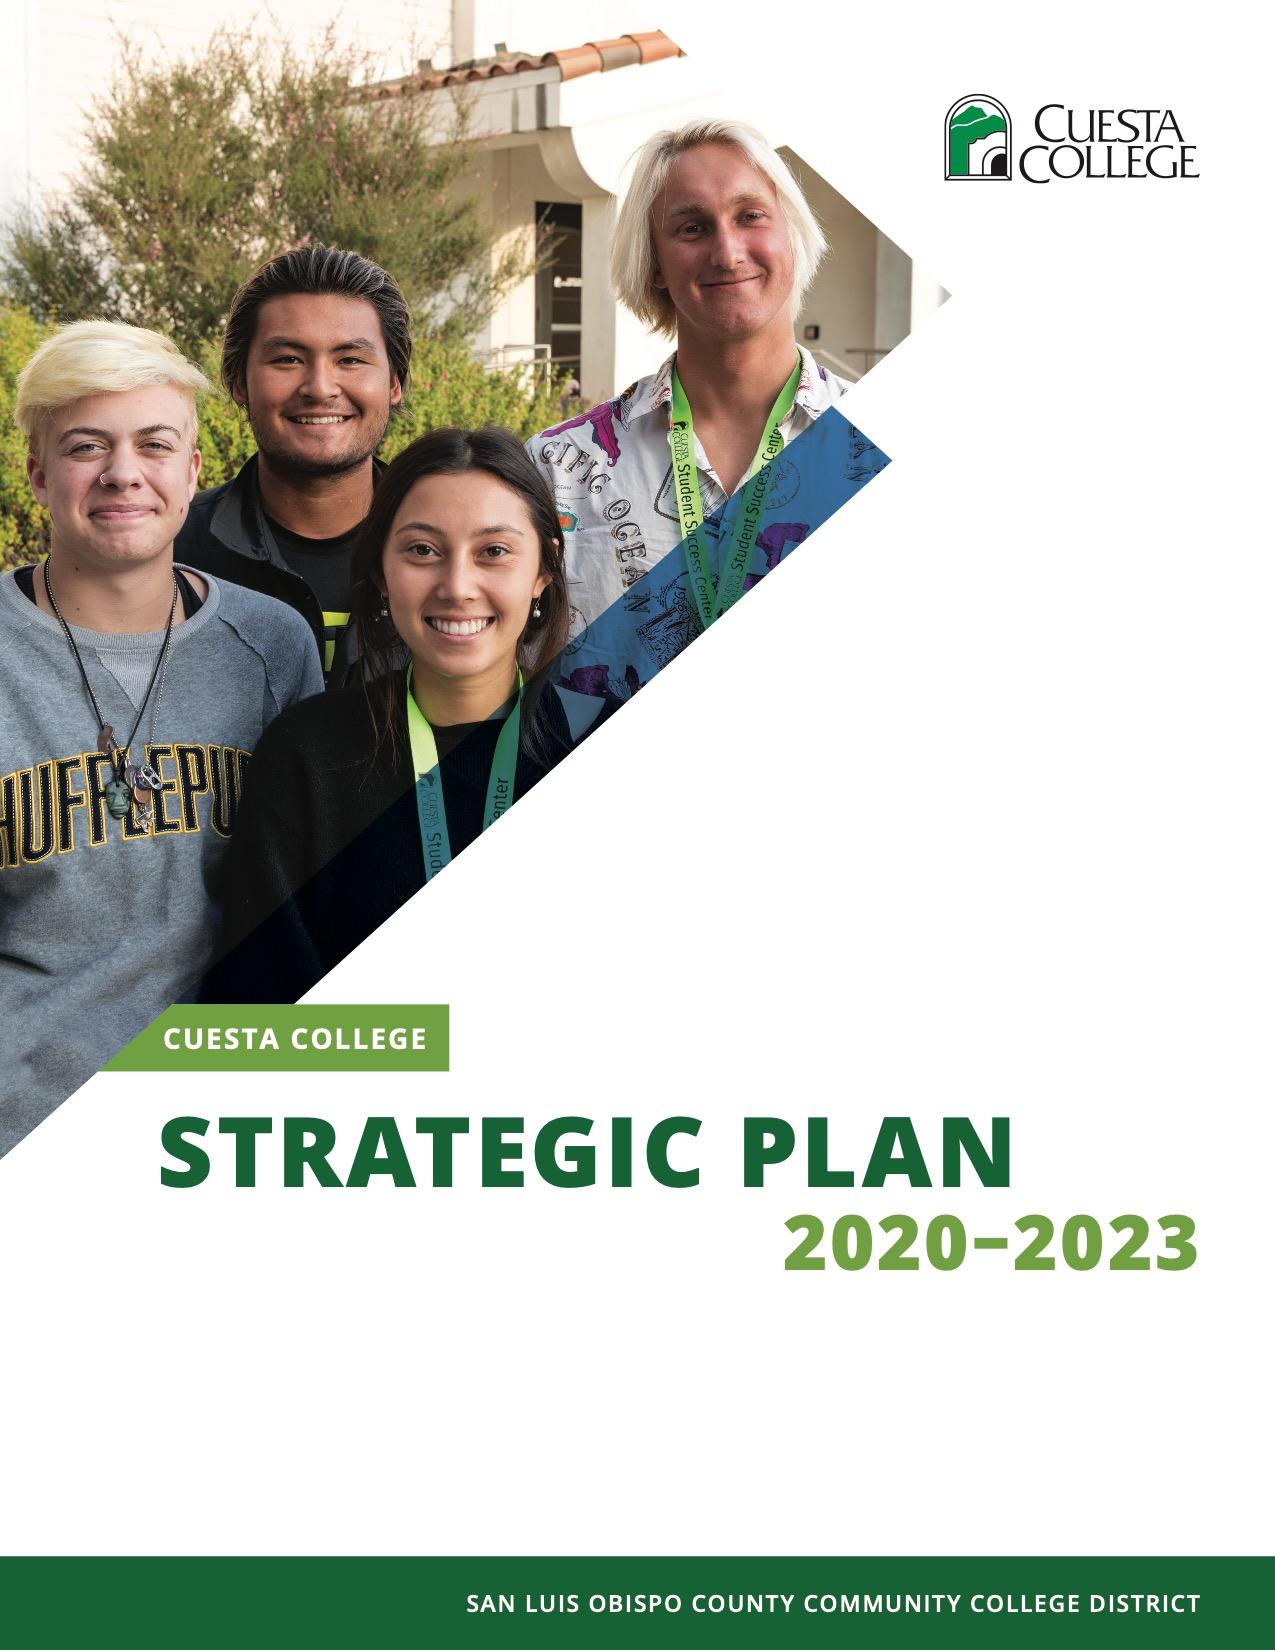 2017-2020 Strategic Plan